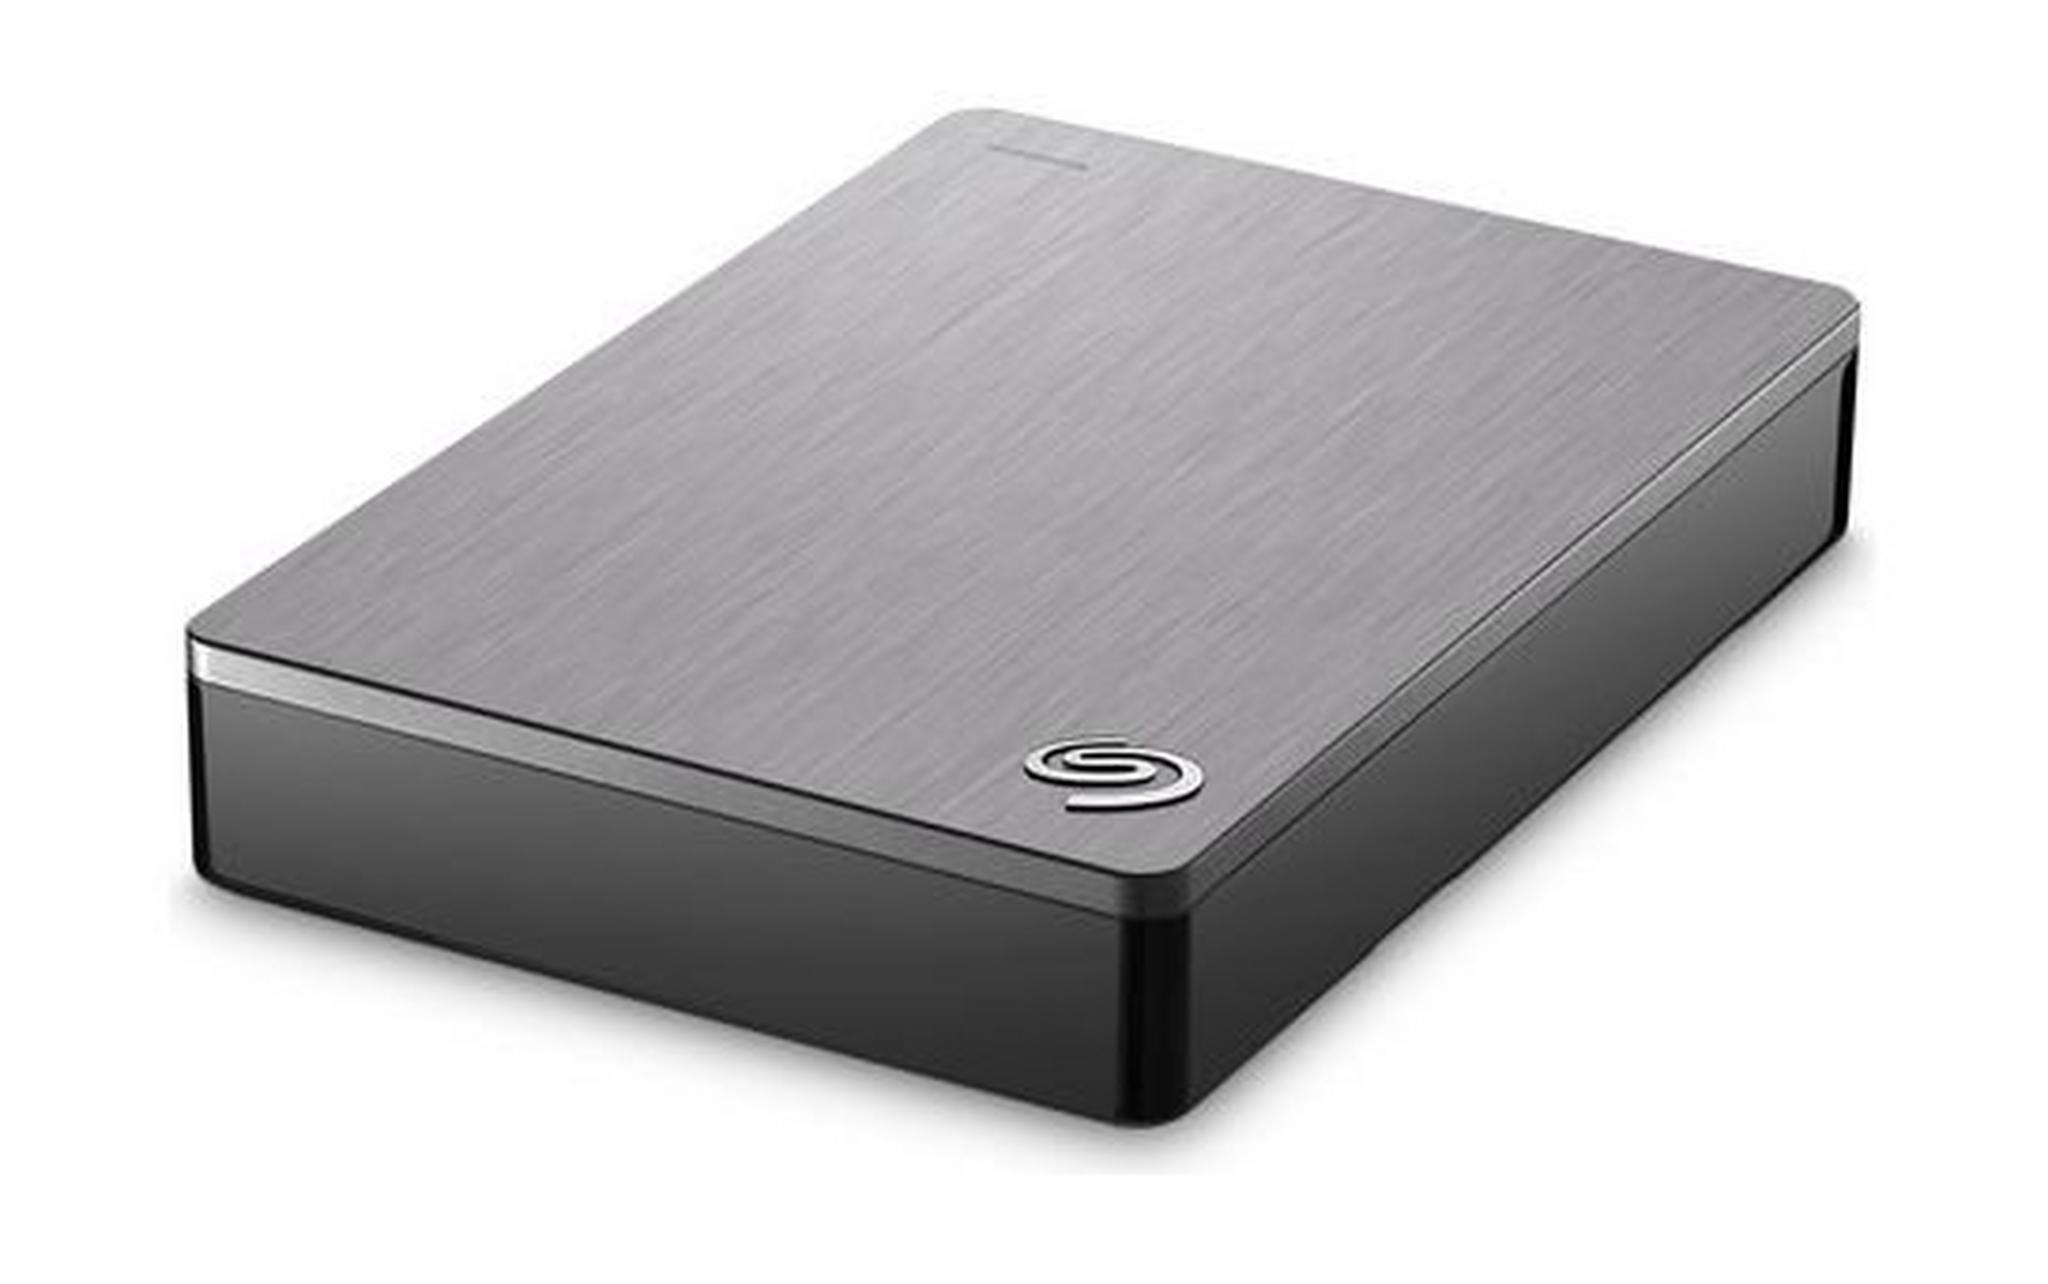 Seagate Backup Plus 4TB Portable Hard Drive (STDR4000900) - Silver